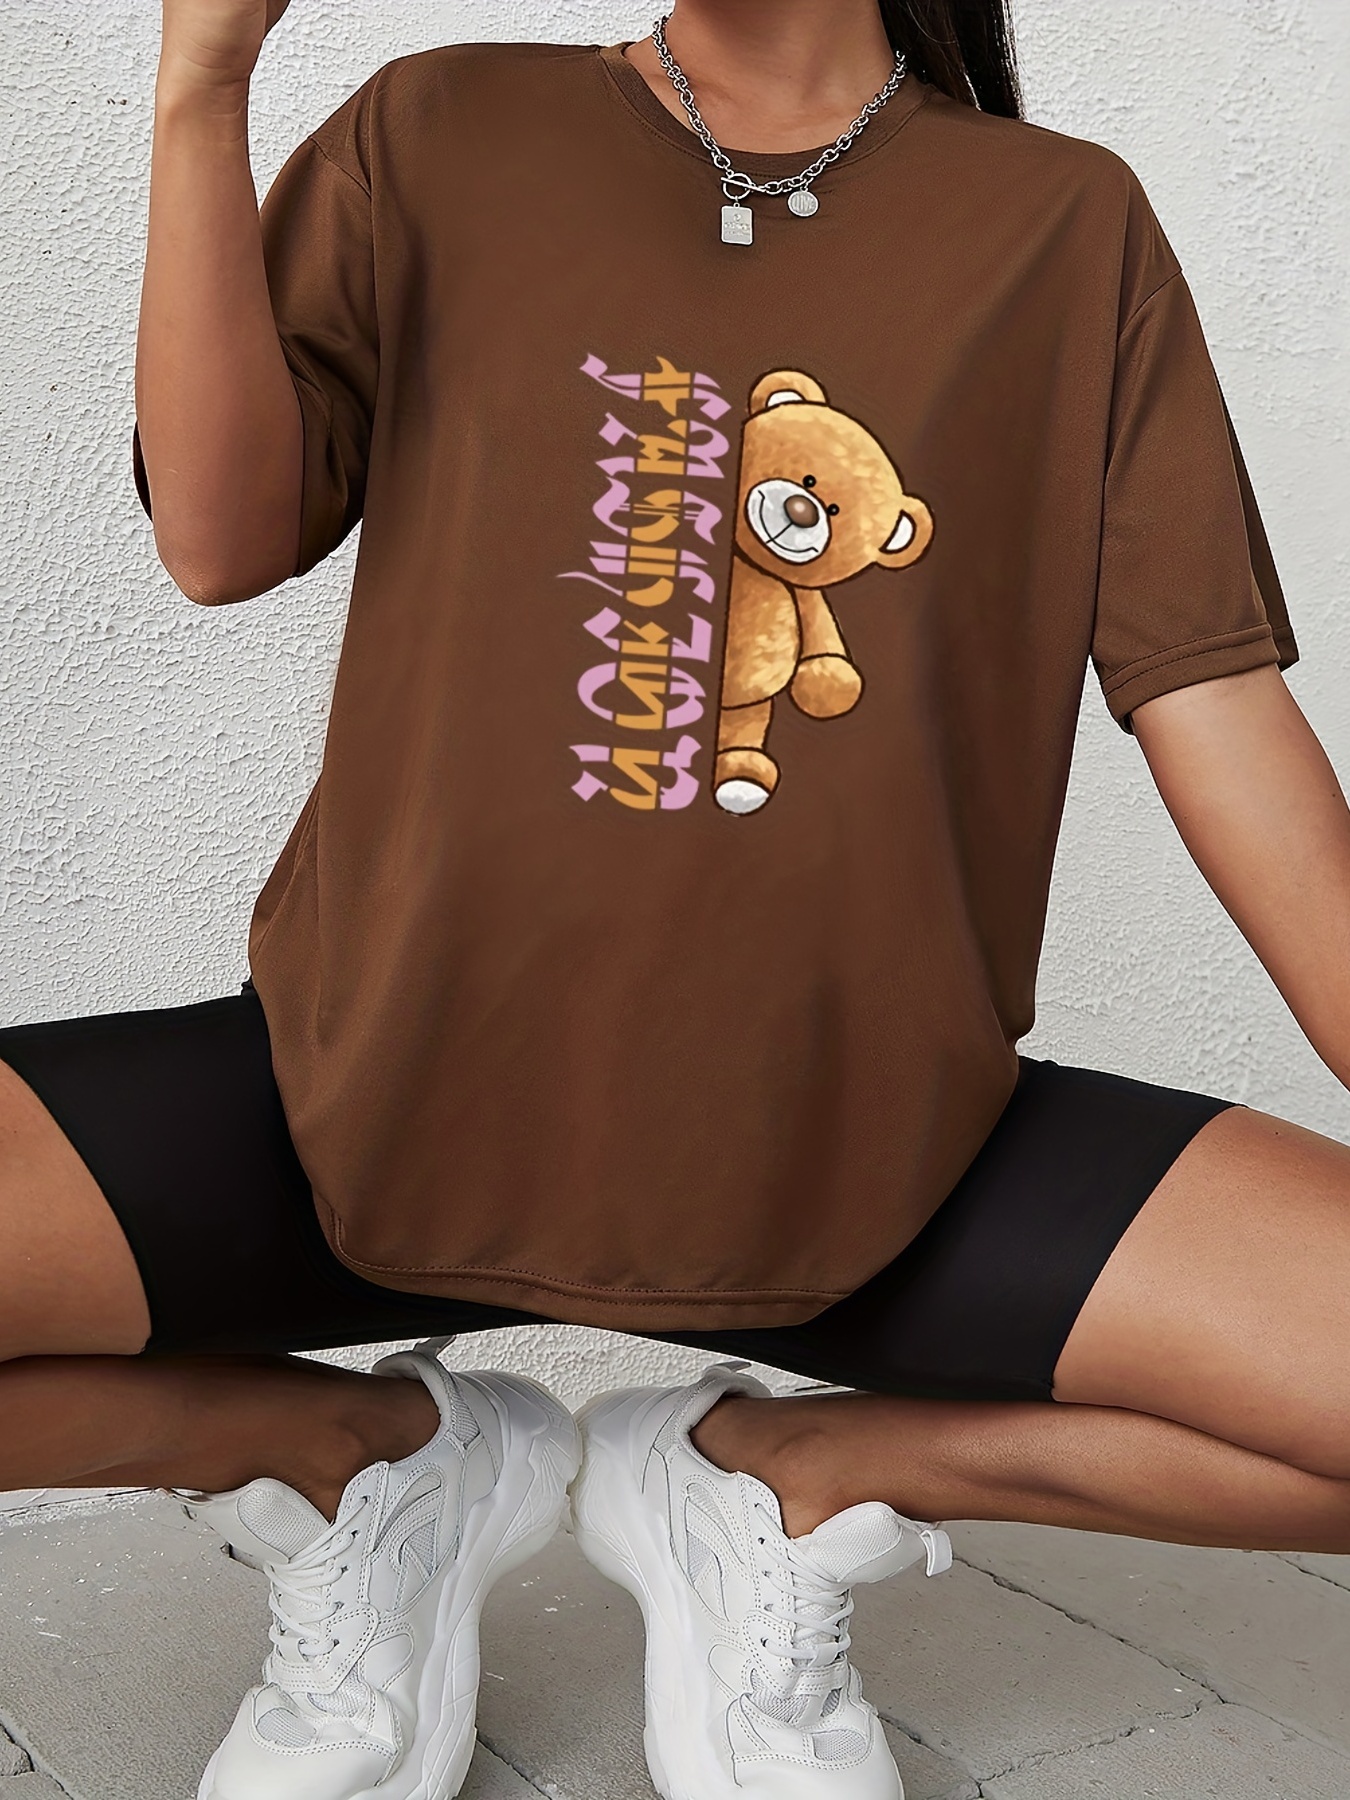 Teddy bear cute girl in a dress, textile print, t-shirt package